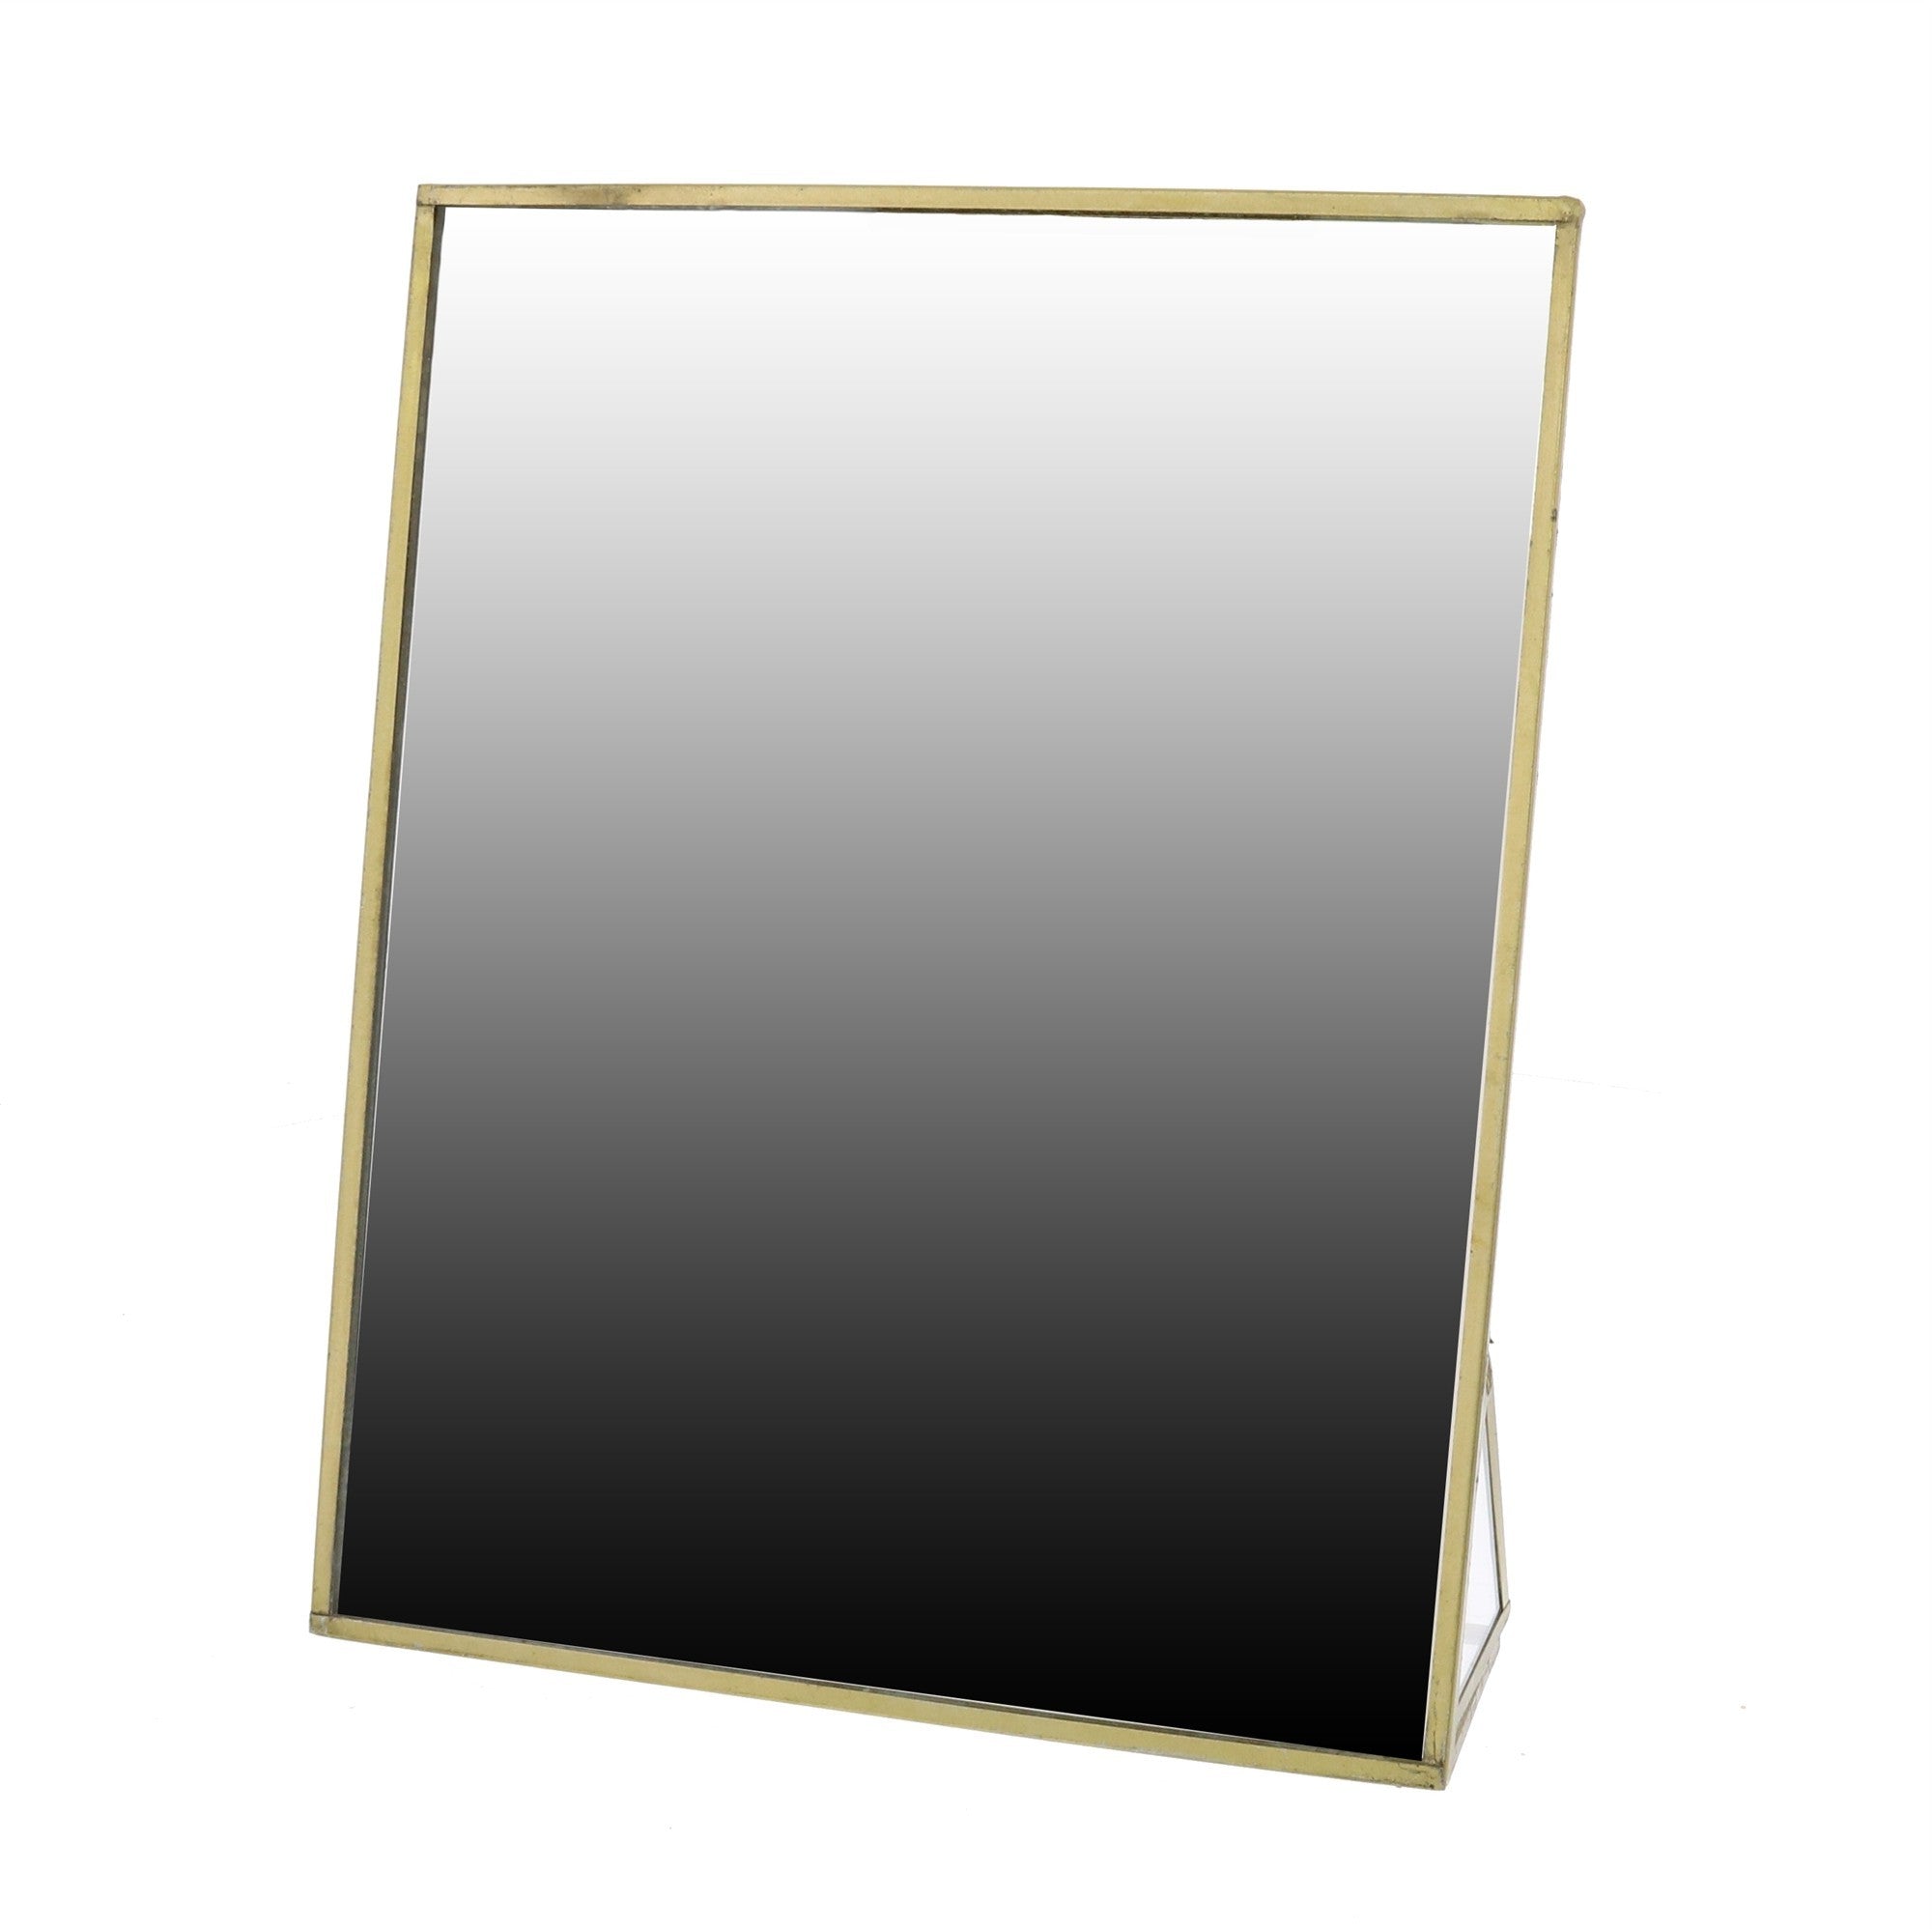 Jumbo Gold Metal Vanity Mirror